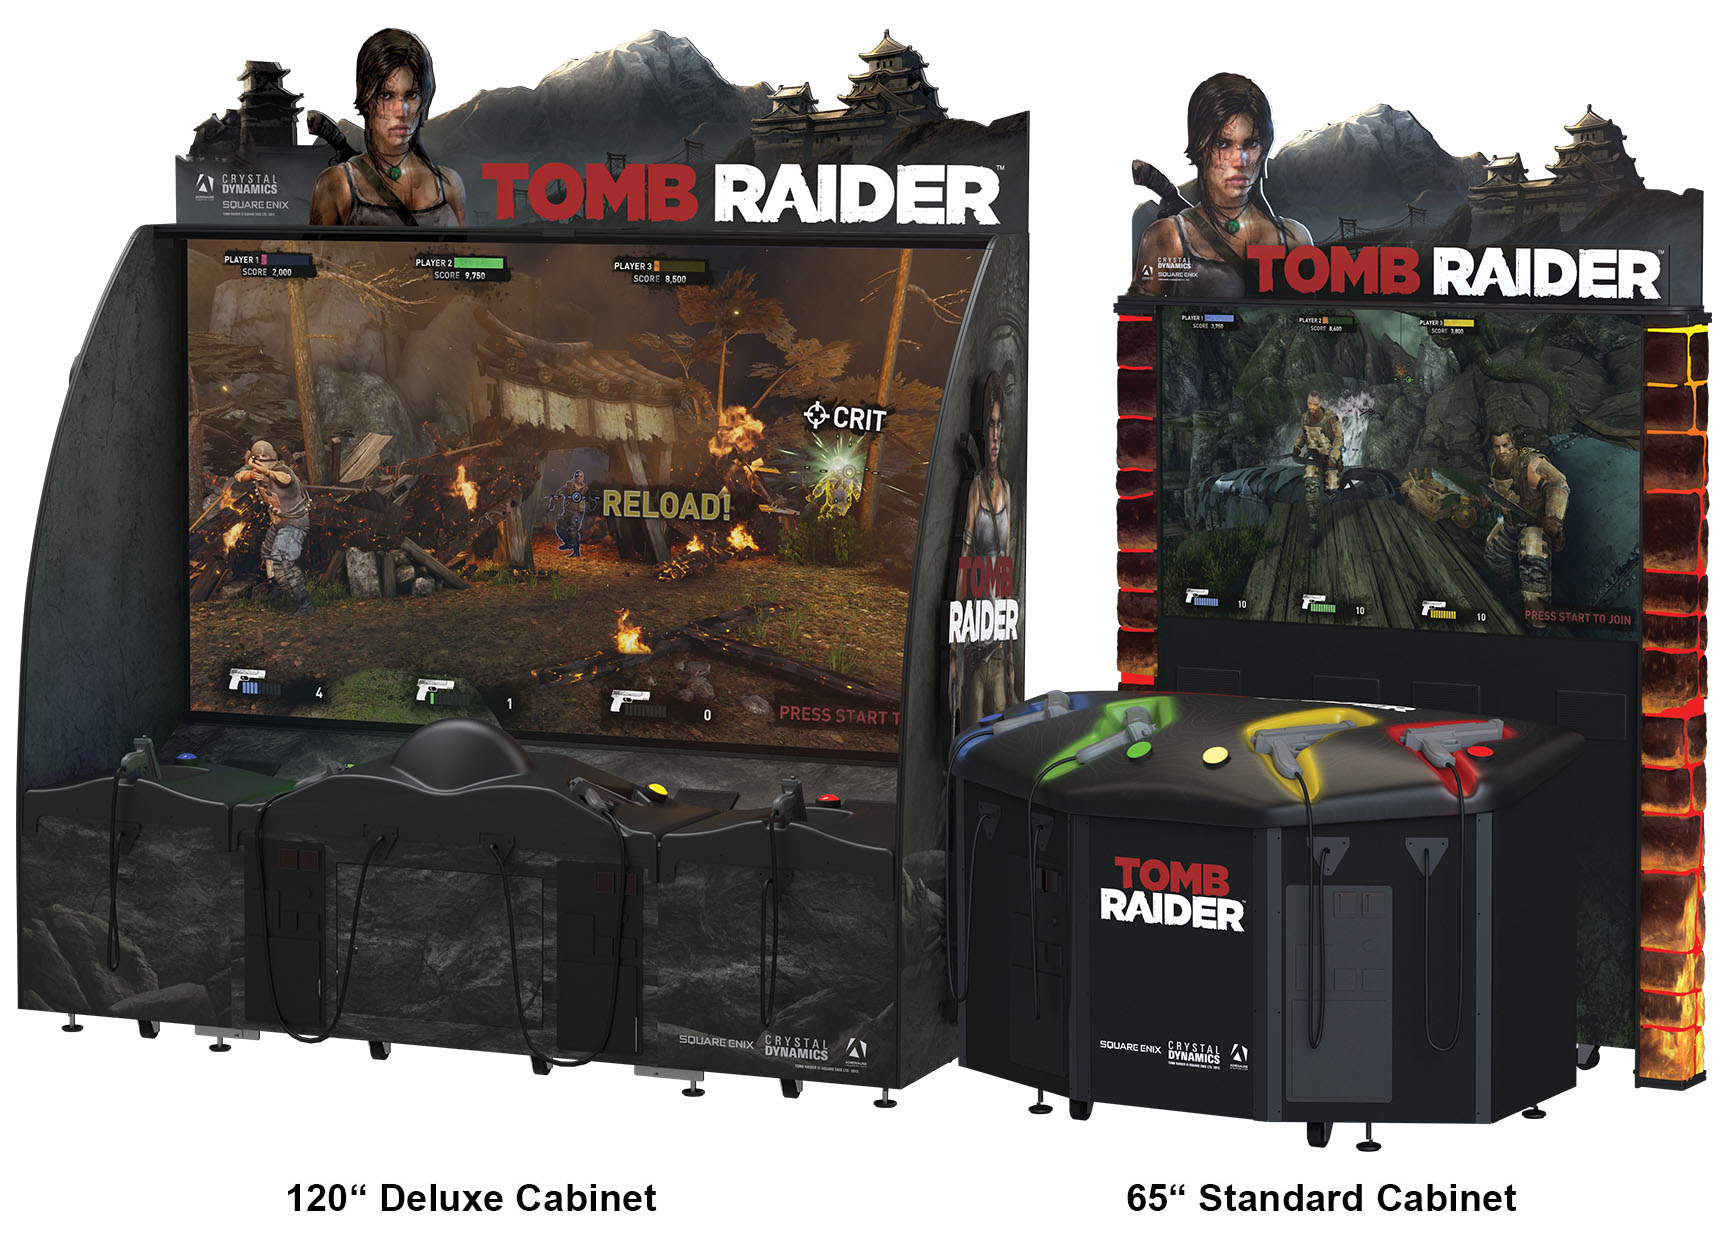 Tomb Raider, 65" STD, 4 Player